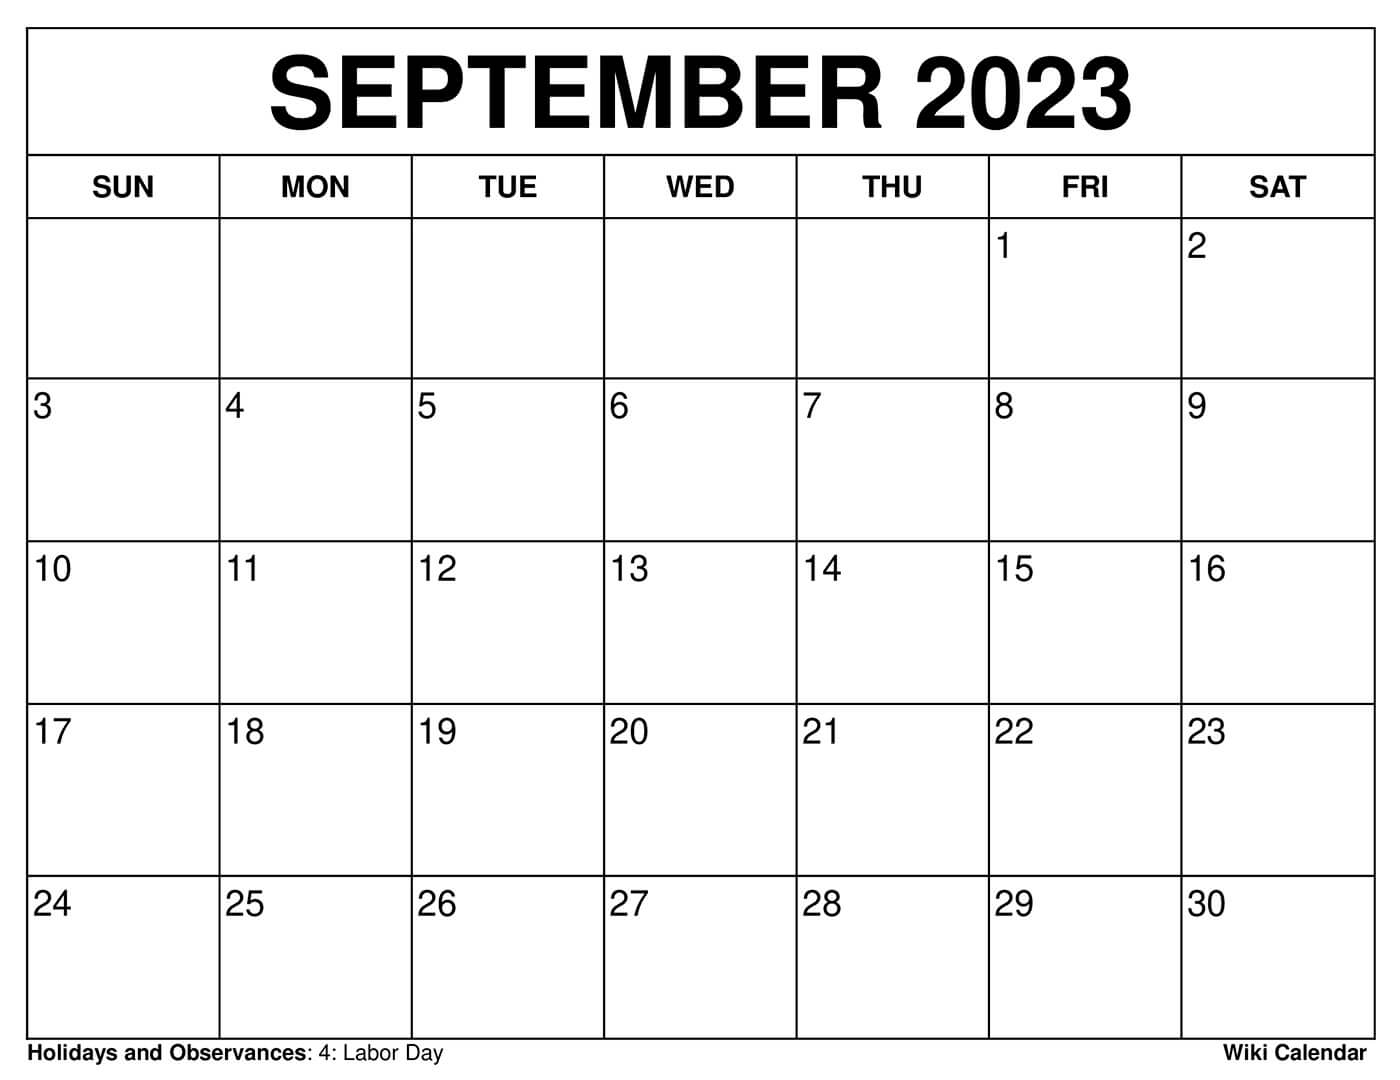 September 2022 Calendar Printable Free Printable September 2022 Calendars - Wiki Calendar